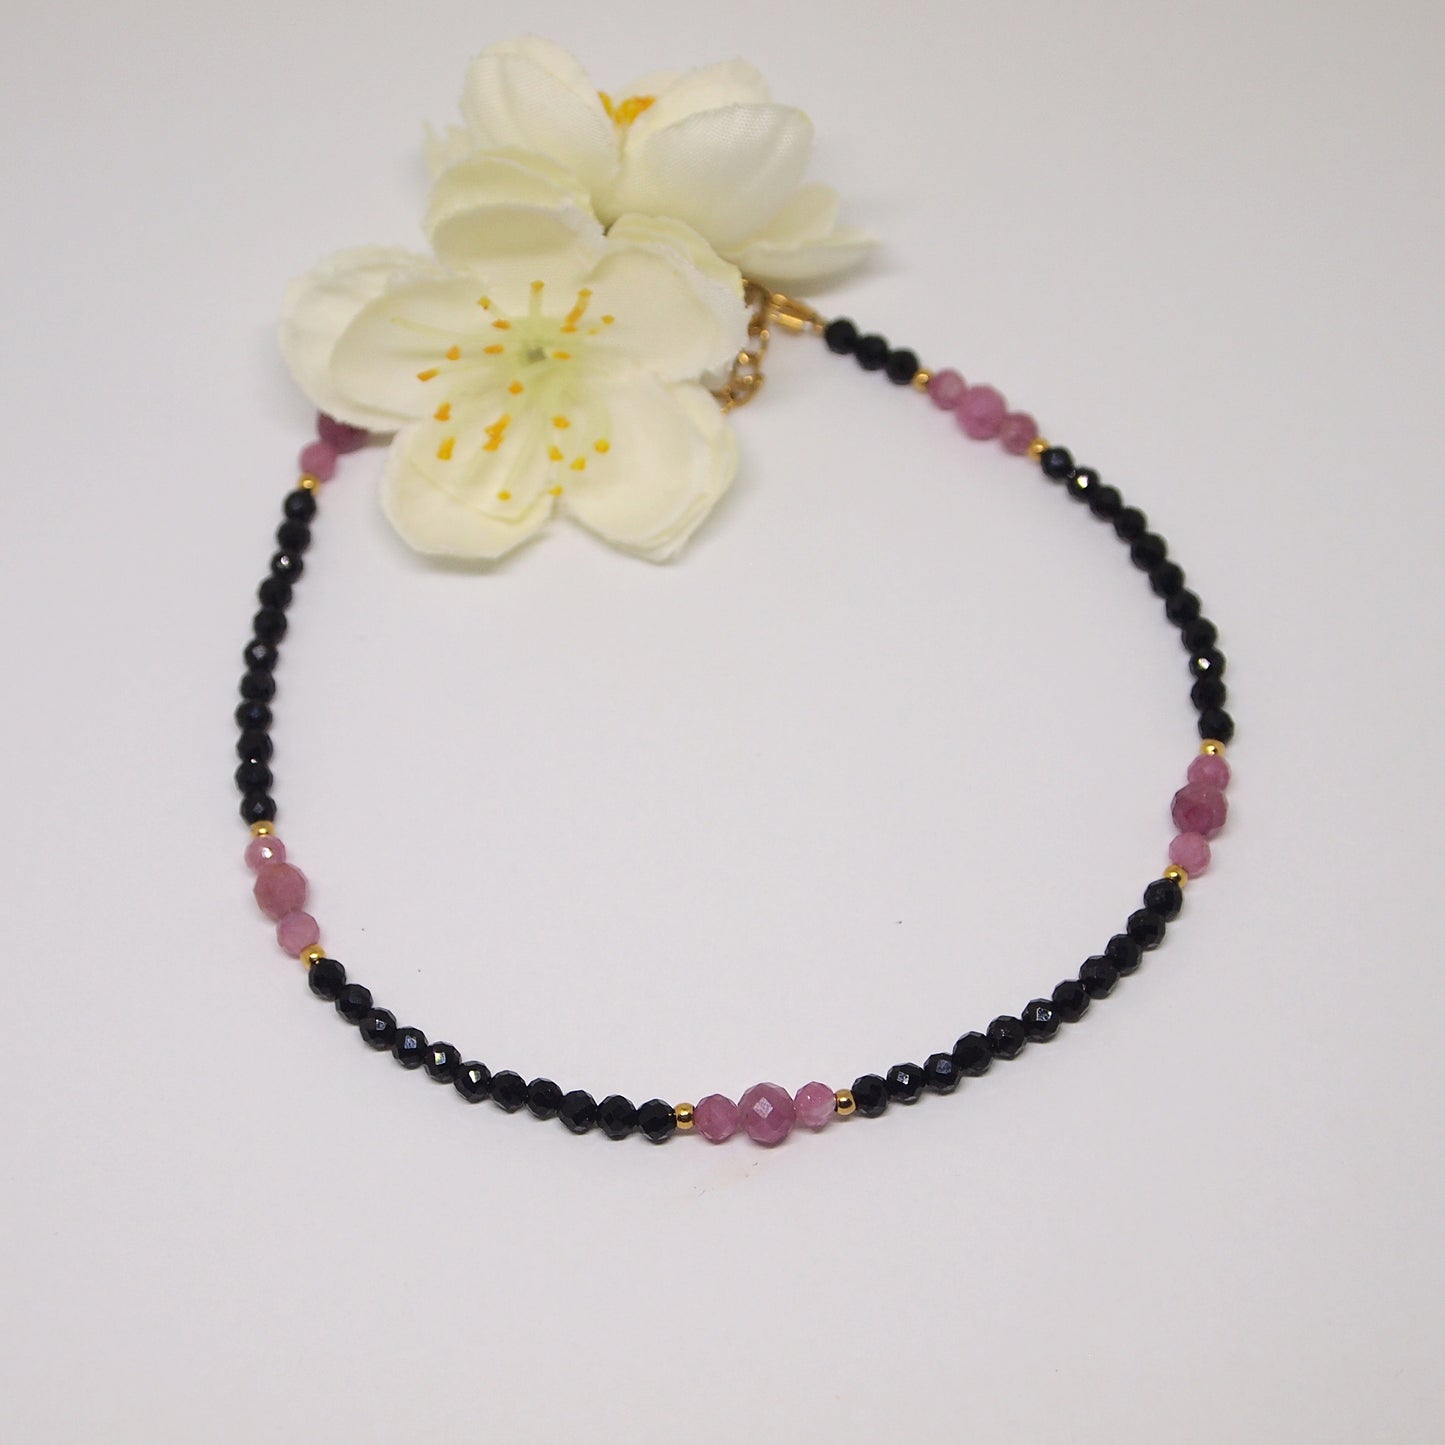 black tourmaline and pink tourmaline jewelry, gemstone anklet